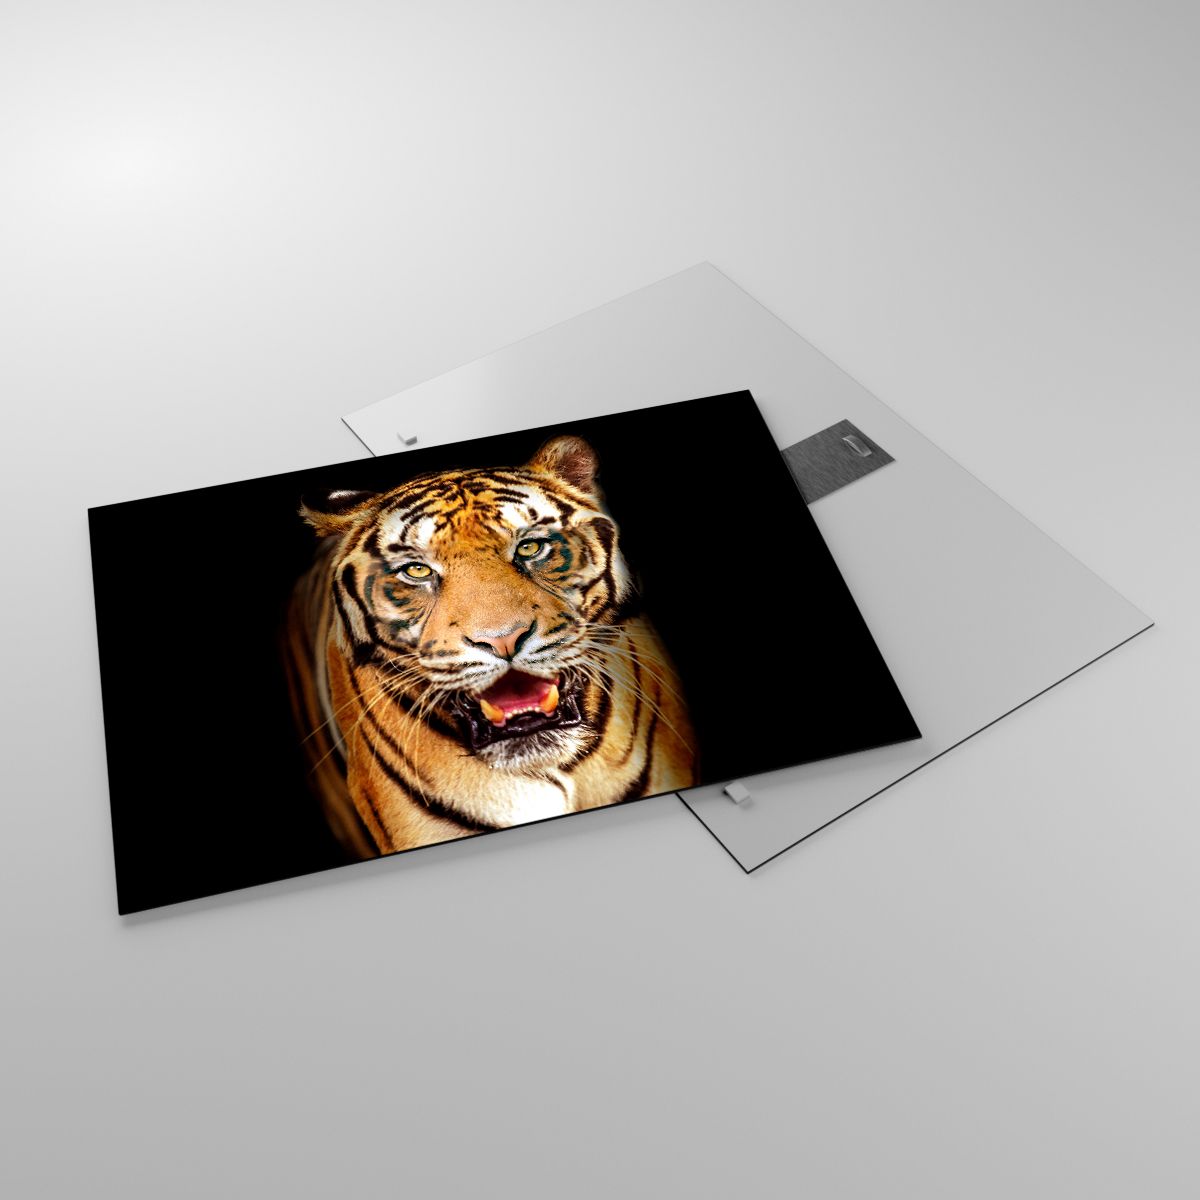 Glasbild Tiere, Glasbild Tiger, Glasbild Raubtier, Glasbild Safari, Glasbild Afrika